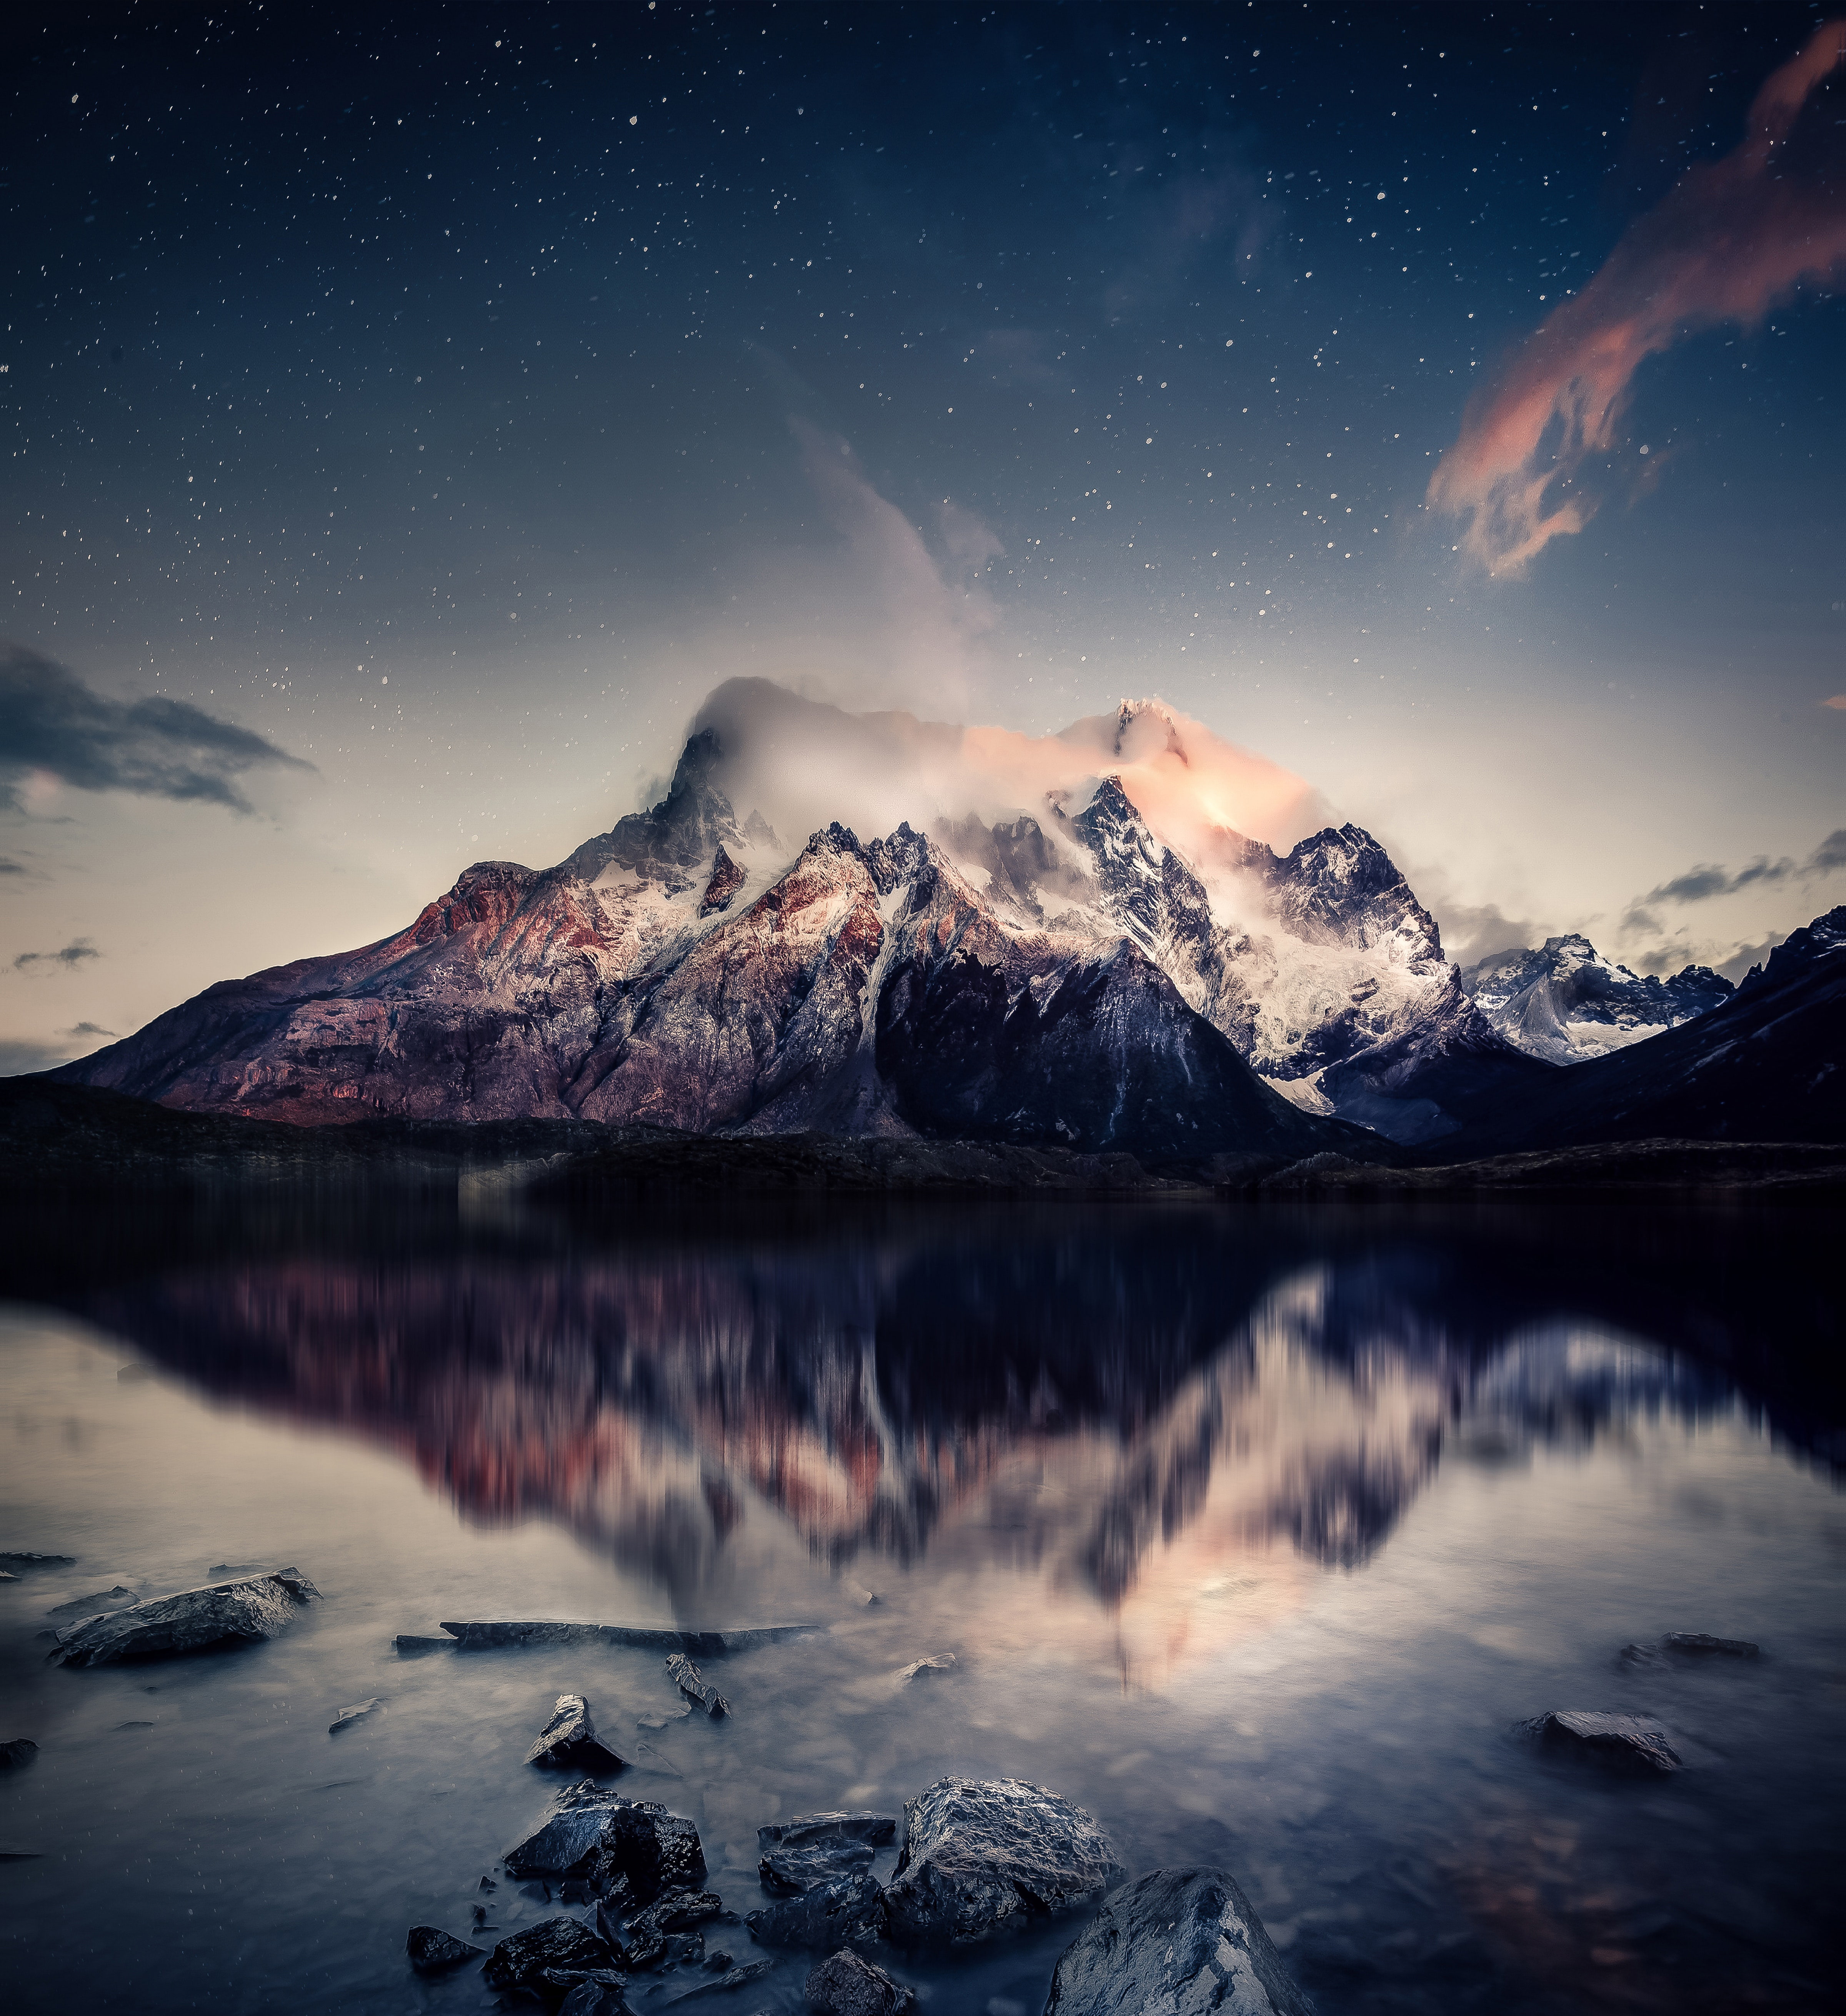 Lake, Mountains, Reflections, HD, 4K